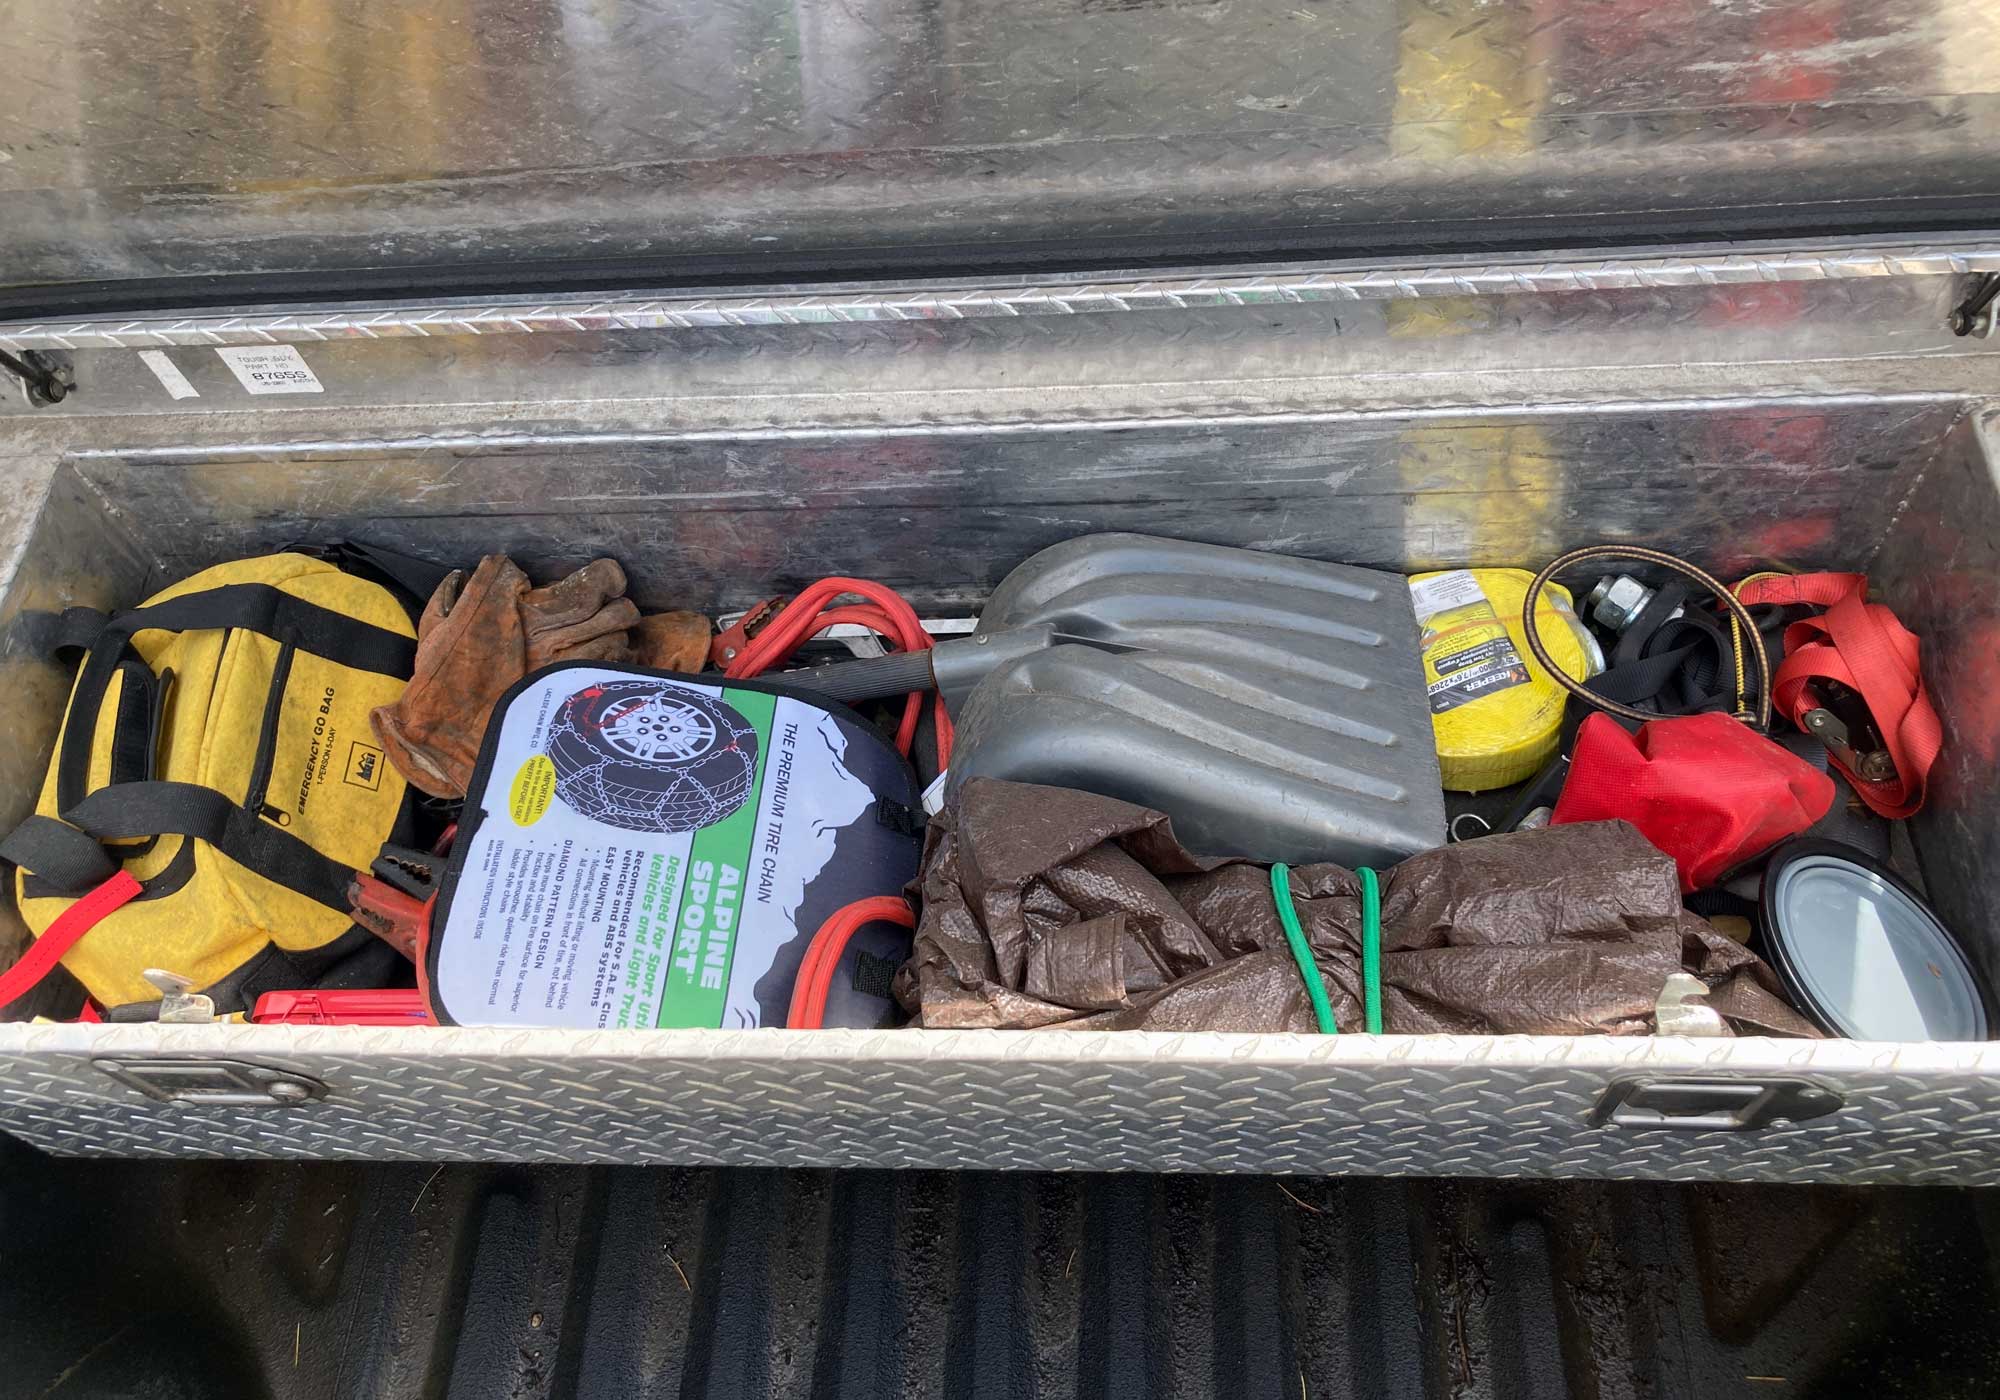 Truck toolbox, a mess of jumper cables, shovels, straps, and tools